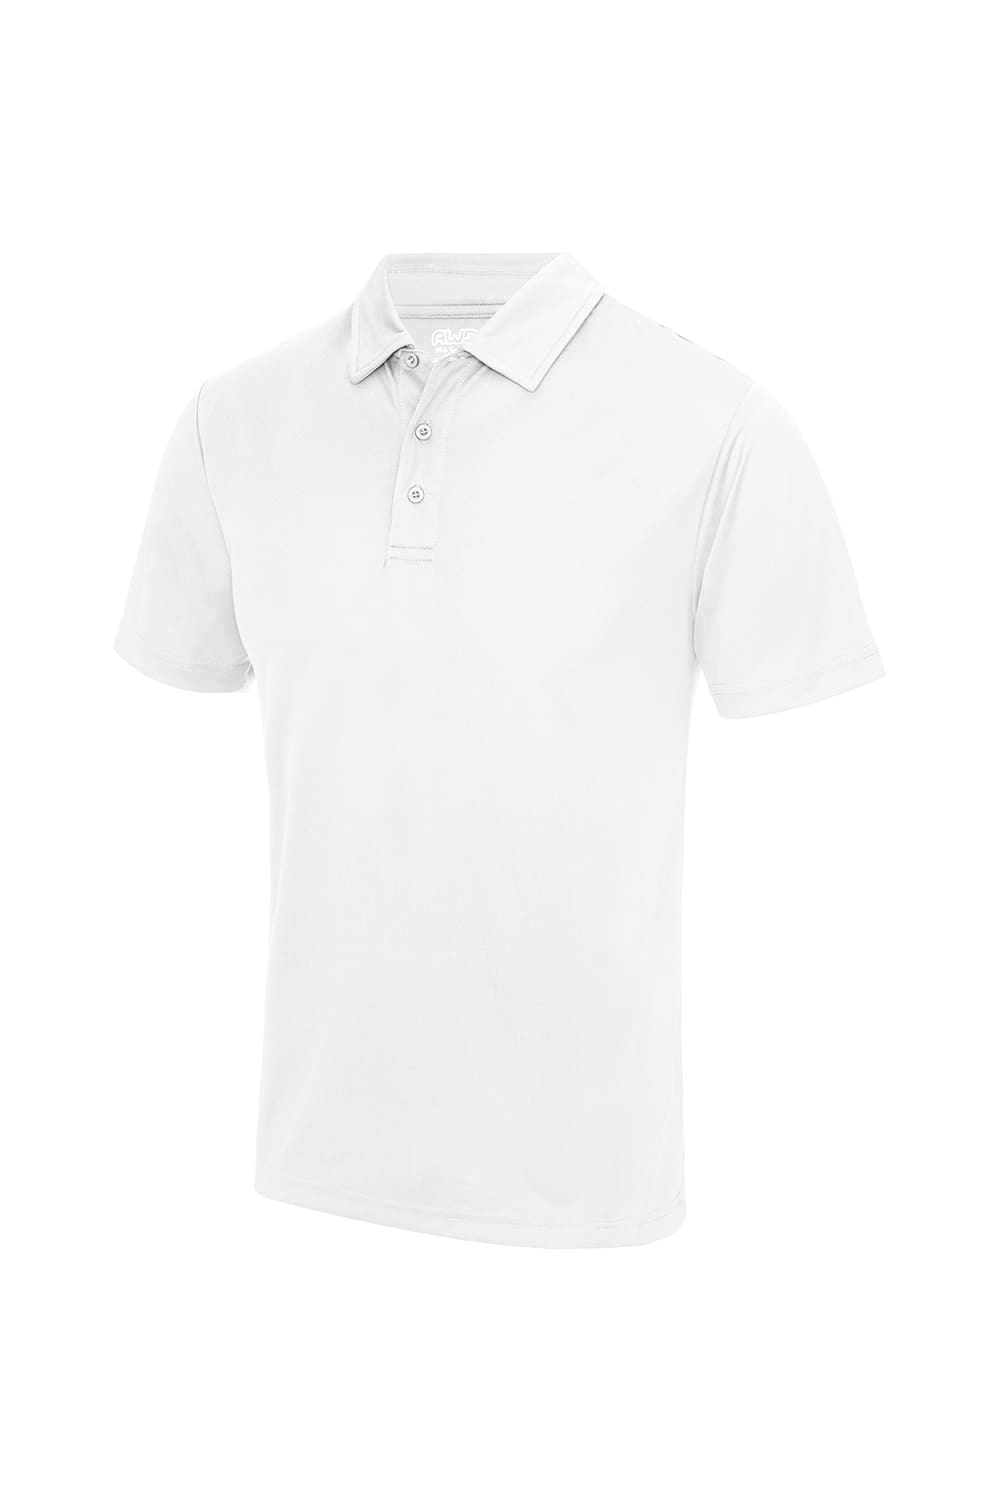 Just Cool Mens Plain Sports Polo Shirt (Arctic White)